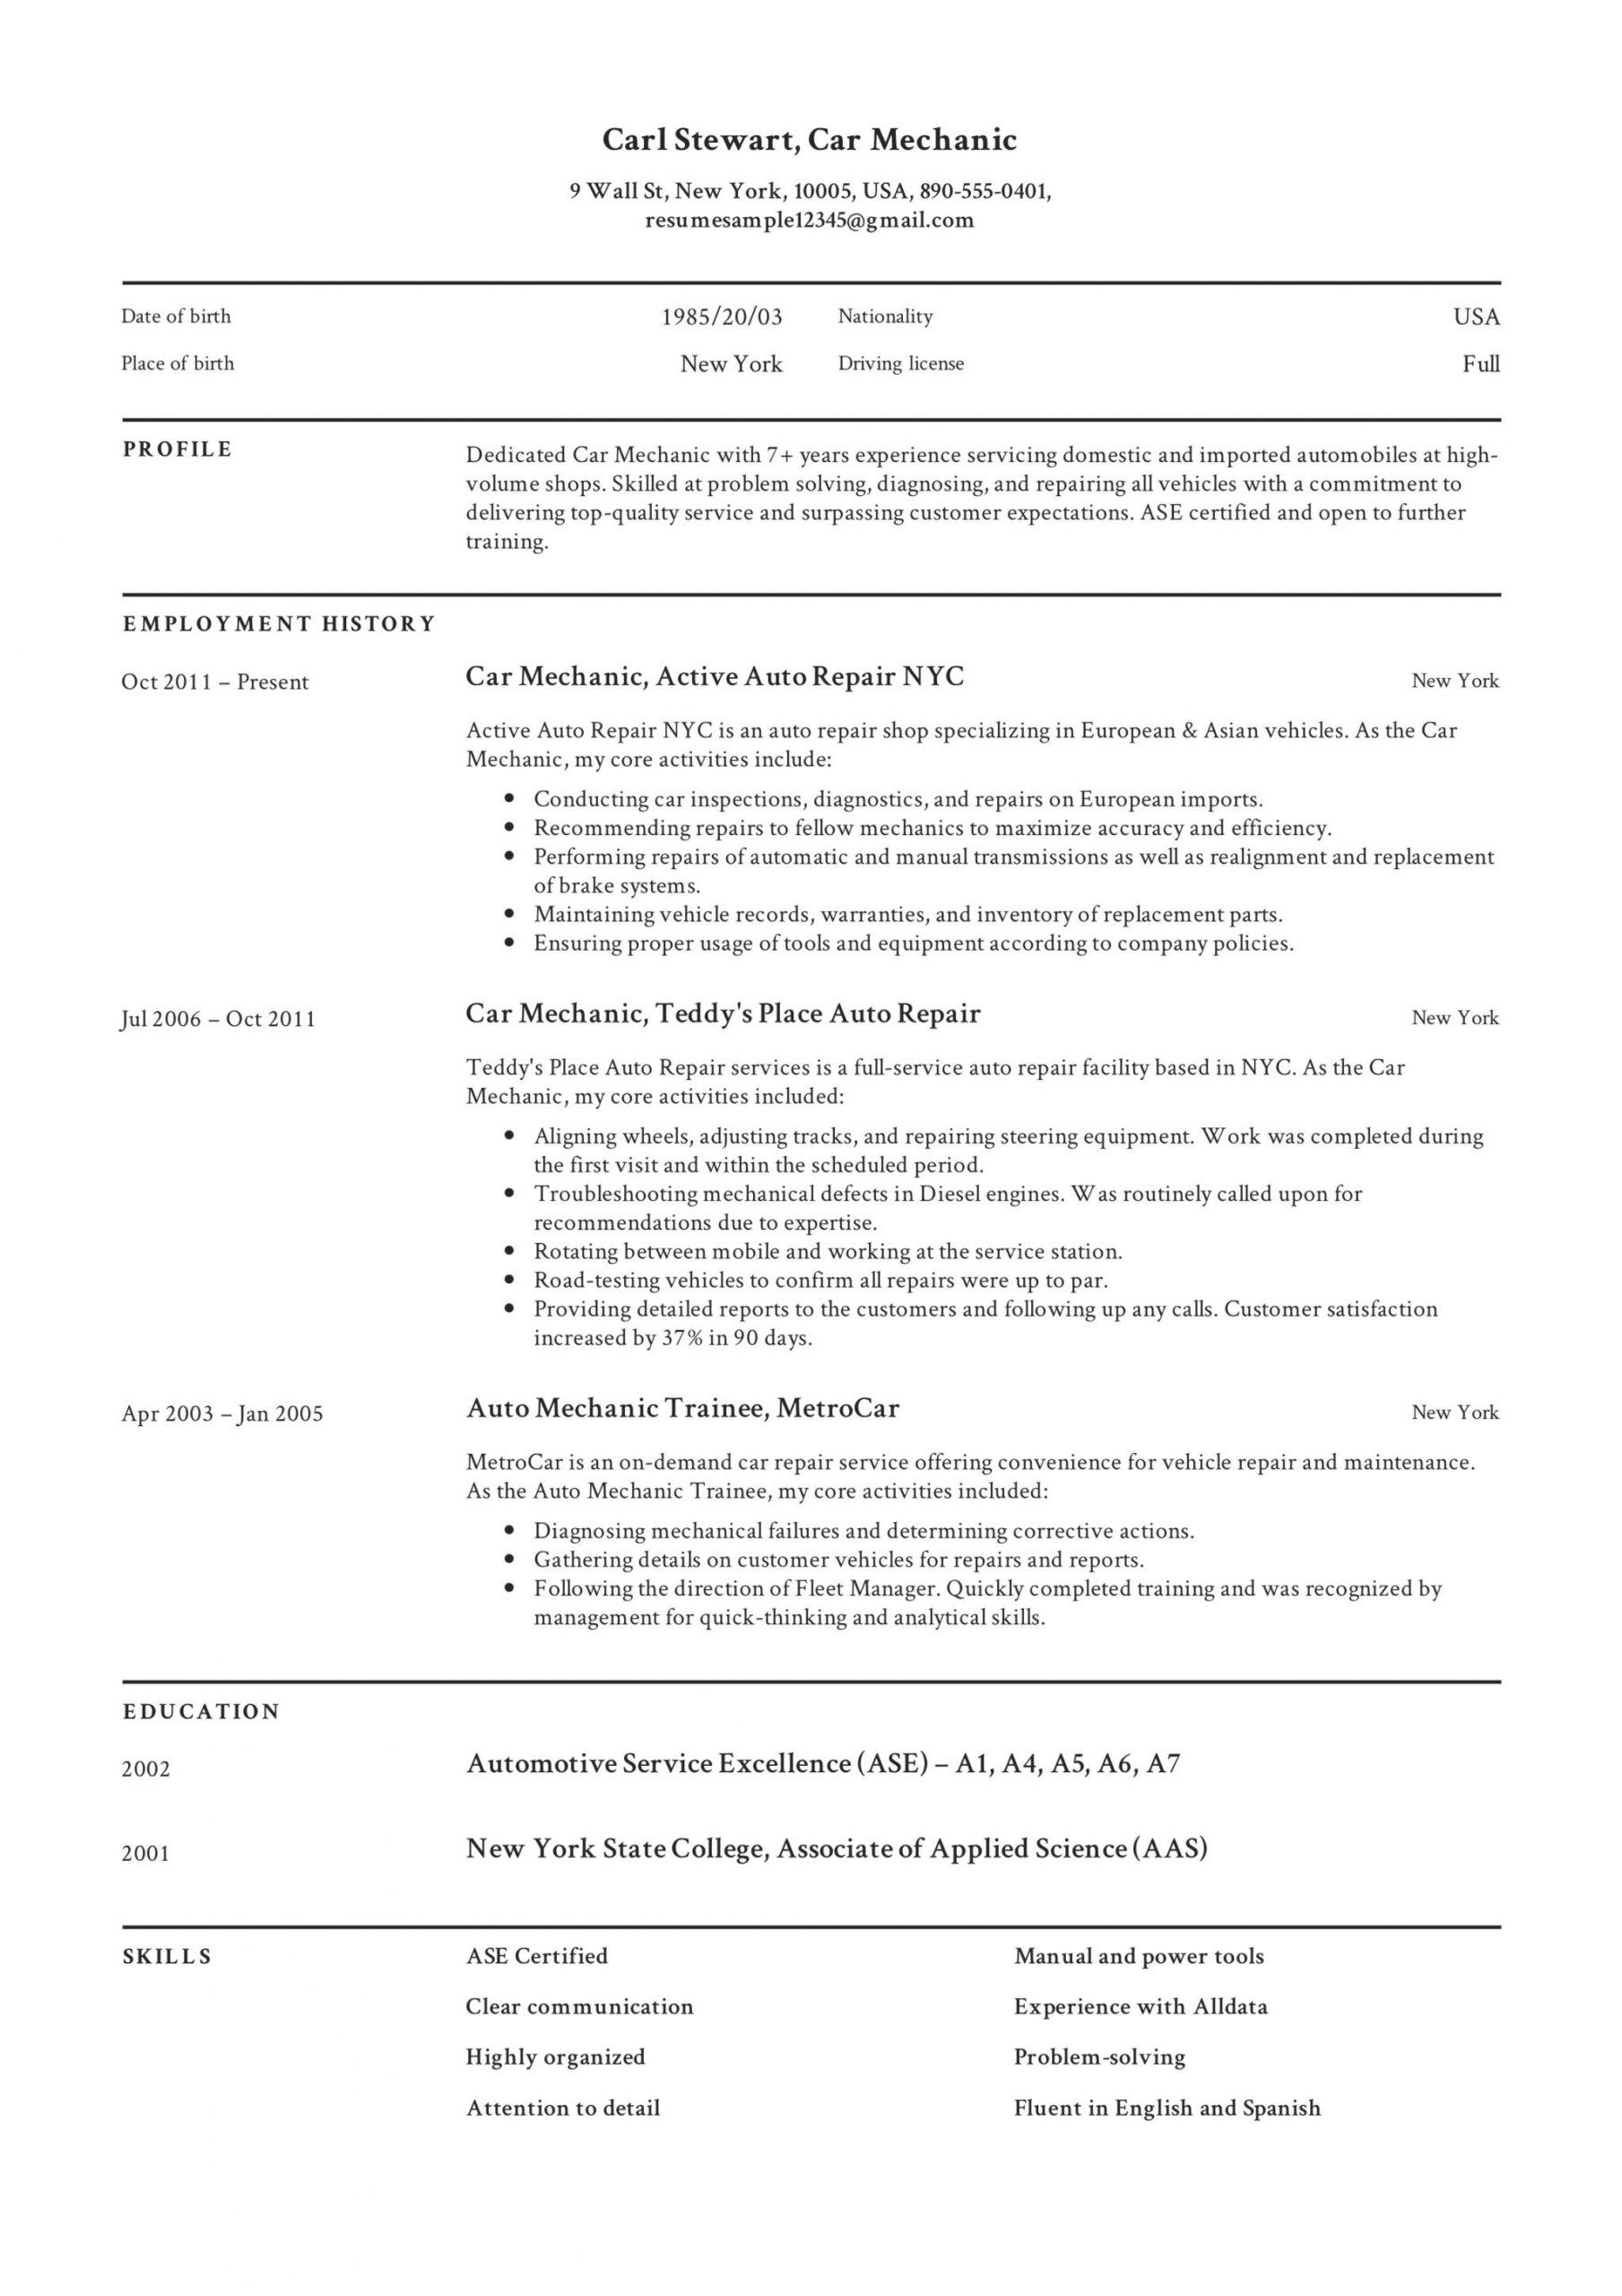 Sample Resume for Auto Mechanic Technician Car Mechanic Resume & Guide 19 Resume Examples 2020